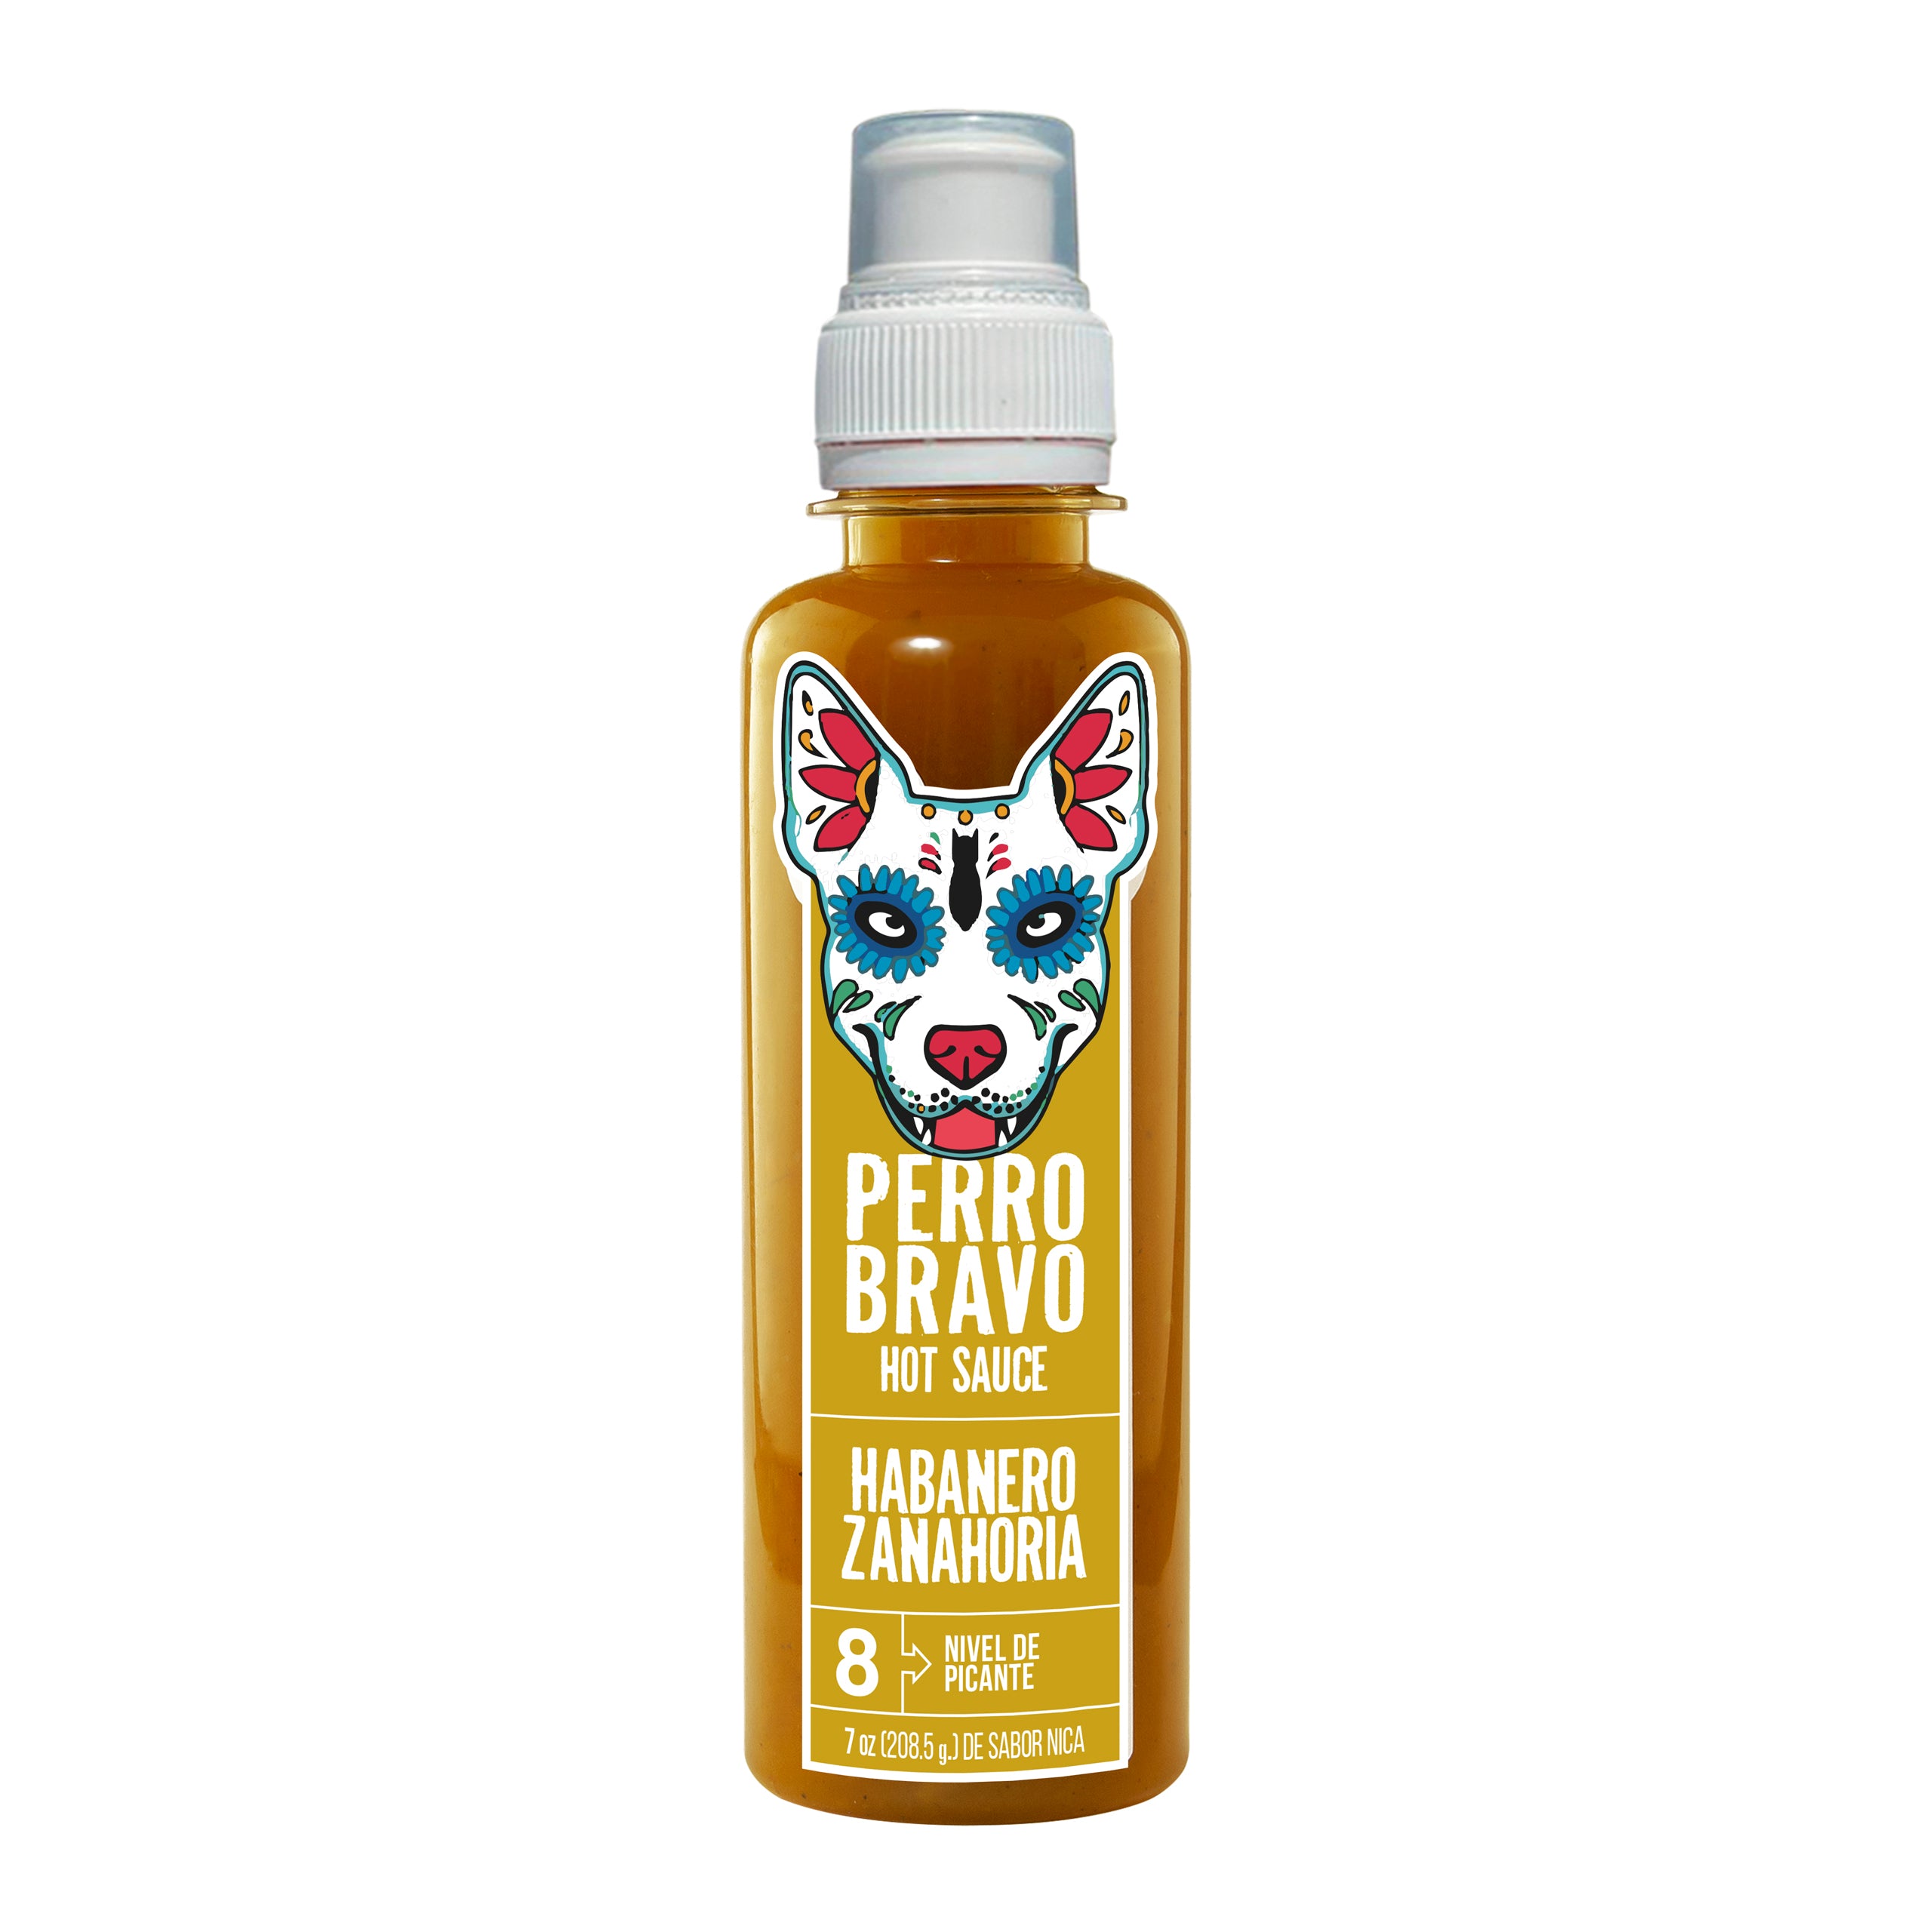 PERRO BRAVO HOT Sauce! - 3 flavor pack